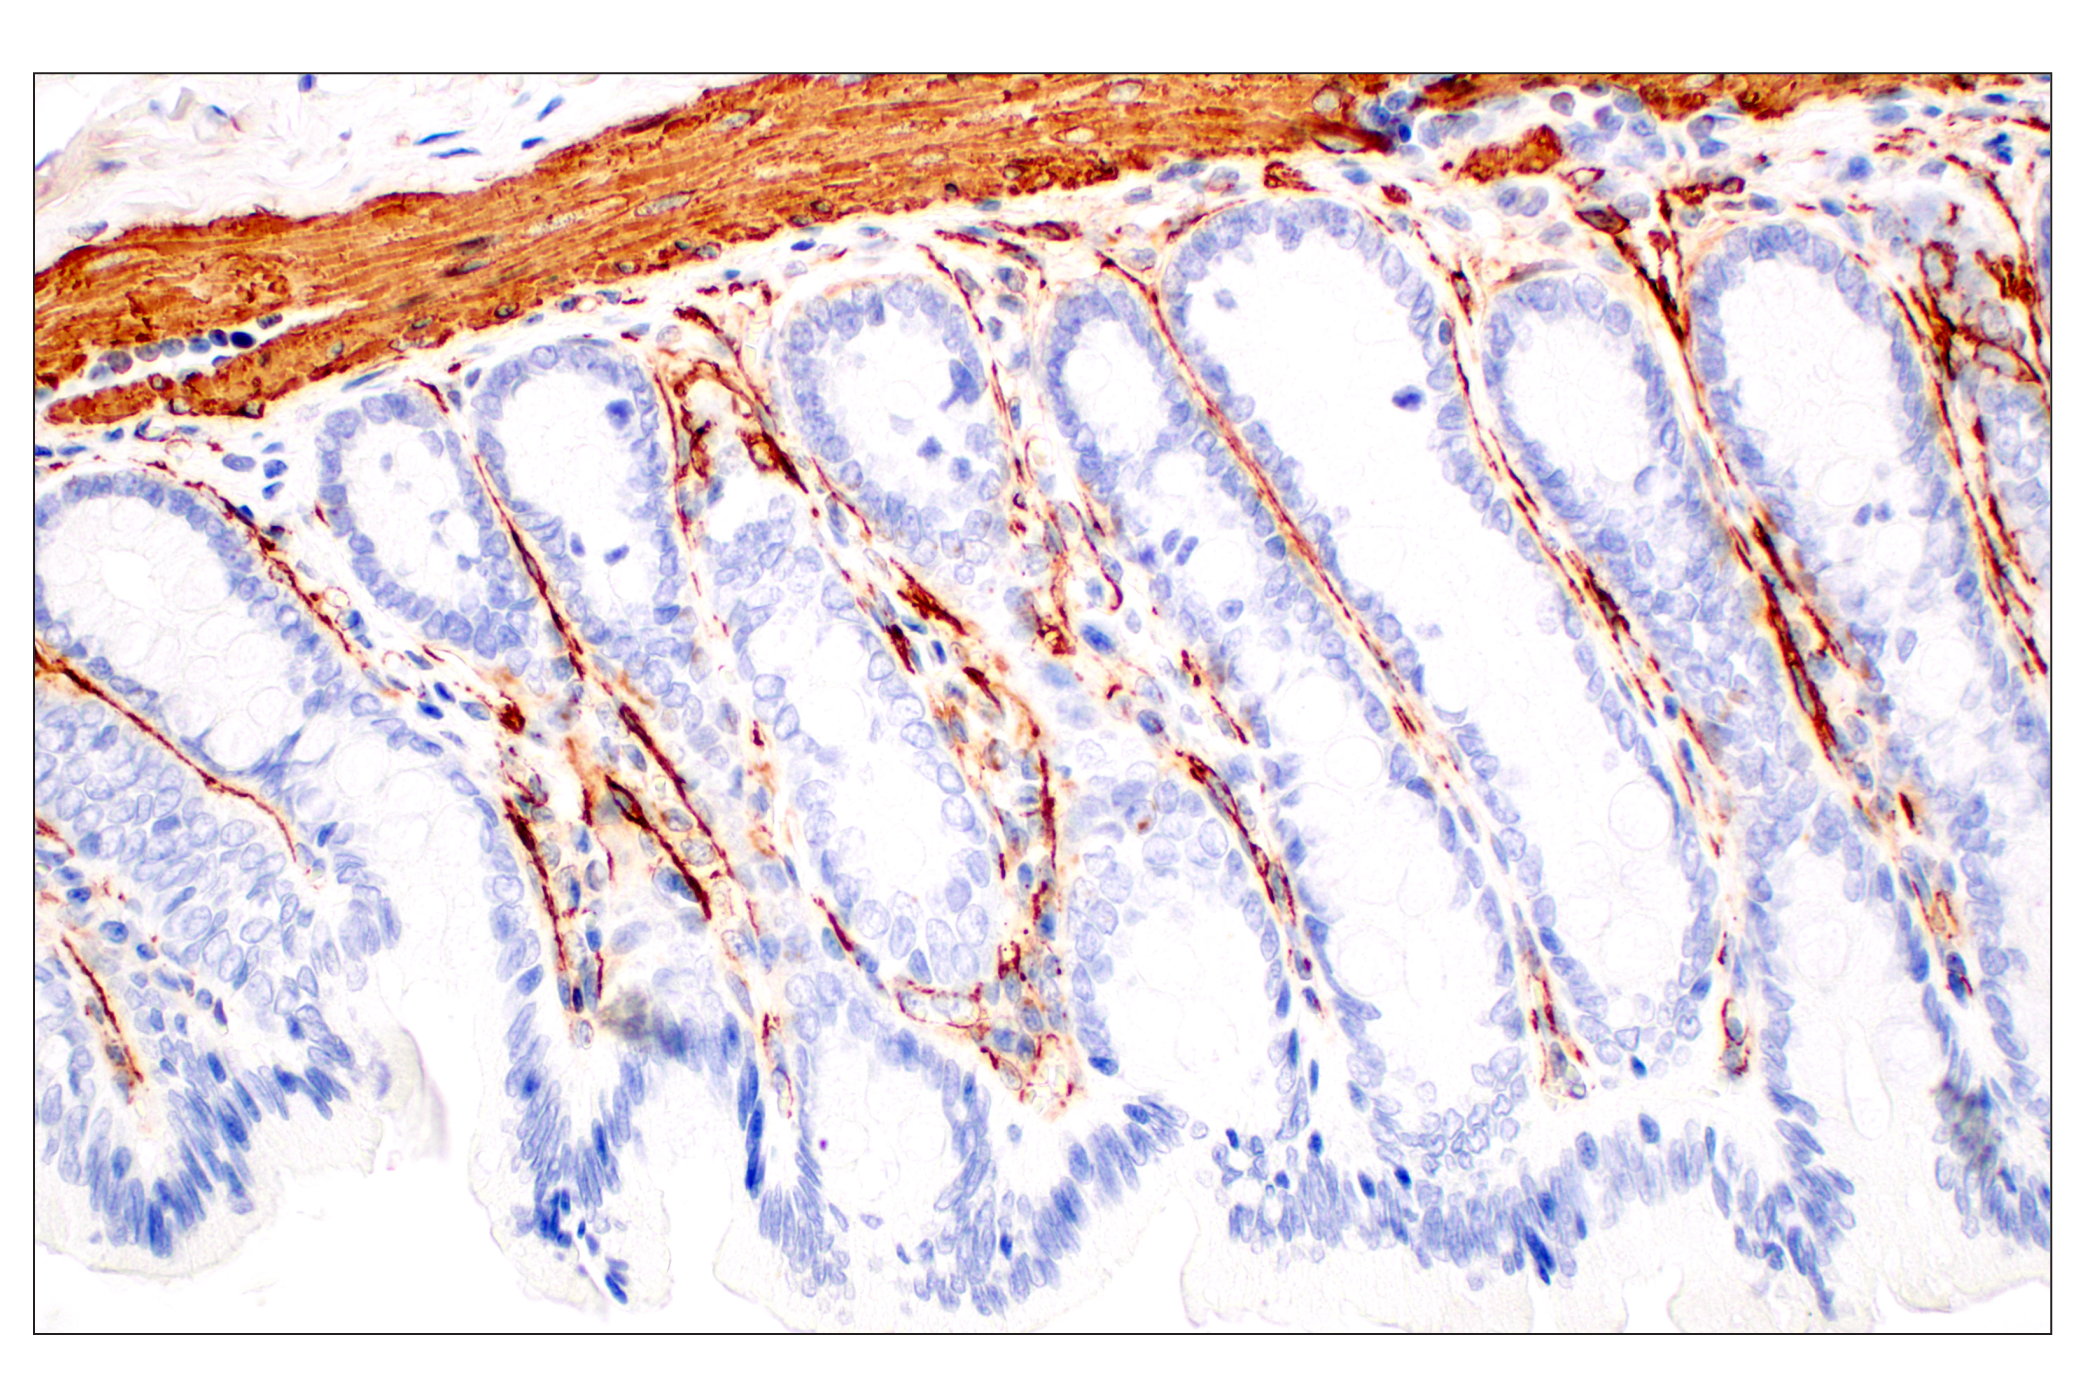  Image 56: Cancer Associated Fibroblast Marker Antibody Sampler Kit